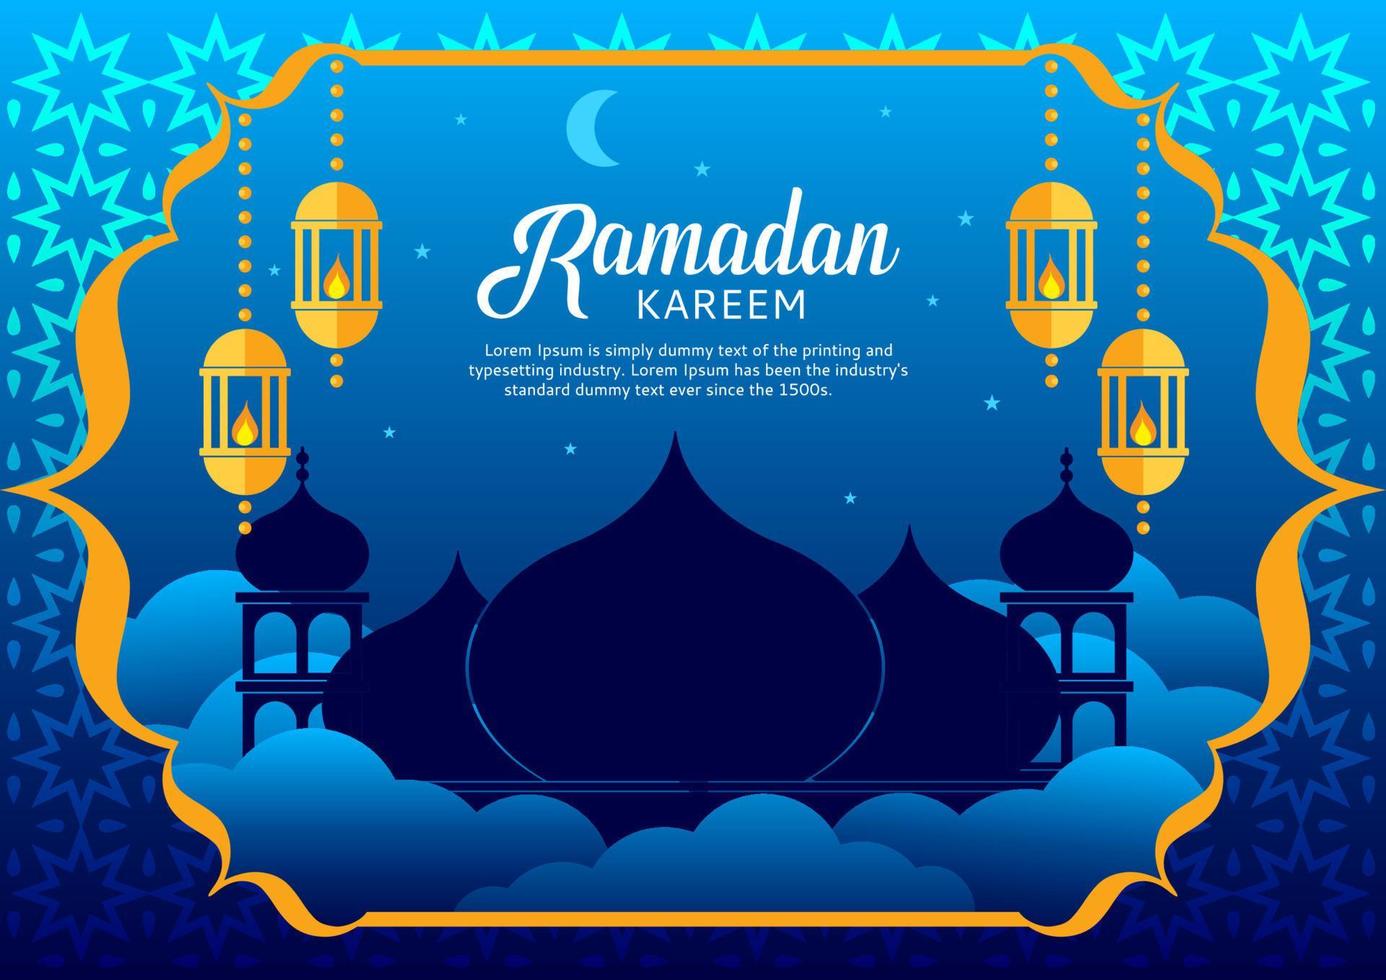 Ramadan kareem groet kaart met een moskee en sterren grootte a4 vector